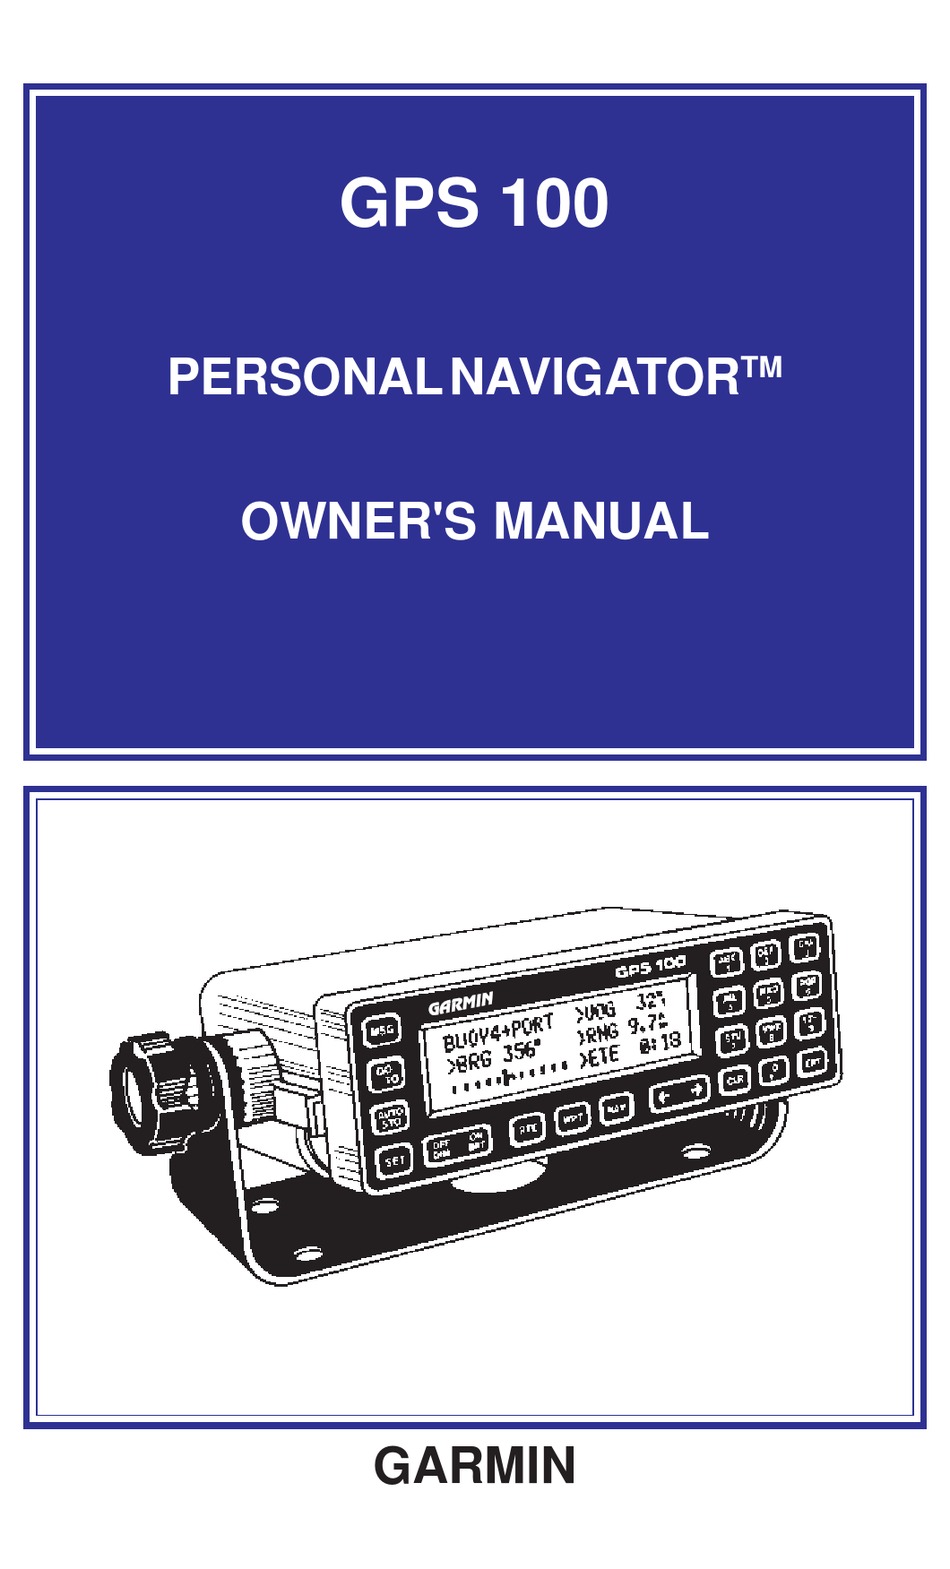 GARMIN GPS 100 OWNER'S MANUAL Pdf Download ManualsLib